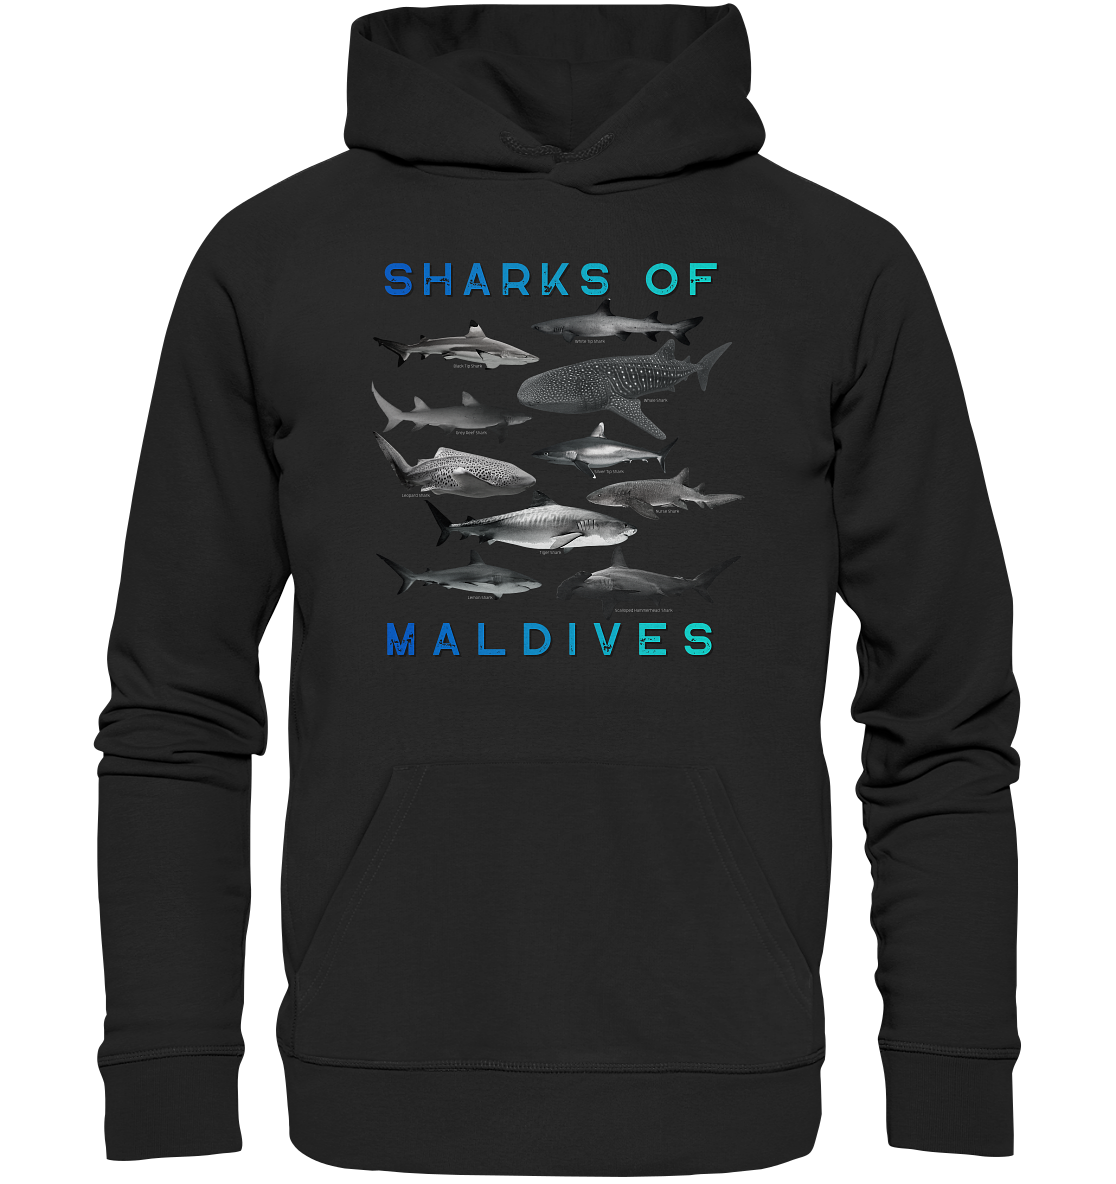 Salty Life "Sharks of Maldives" - Organic Hoodie